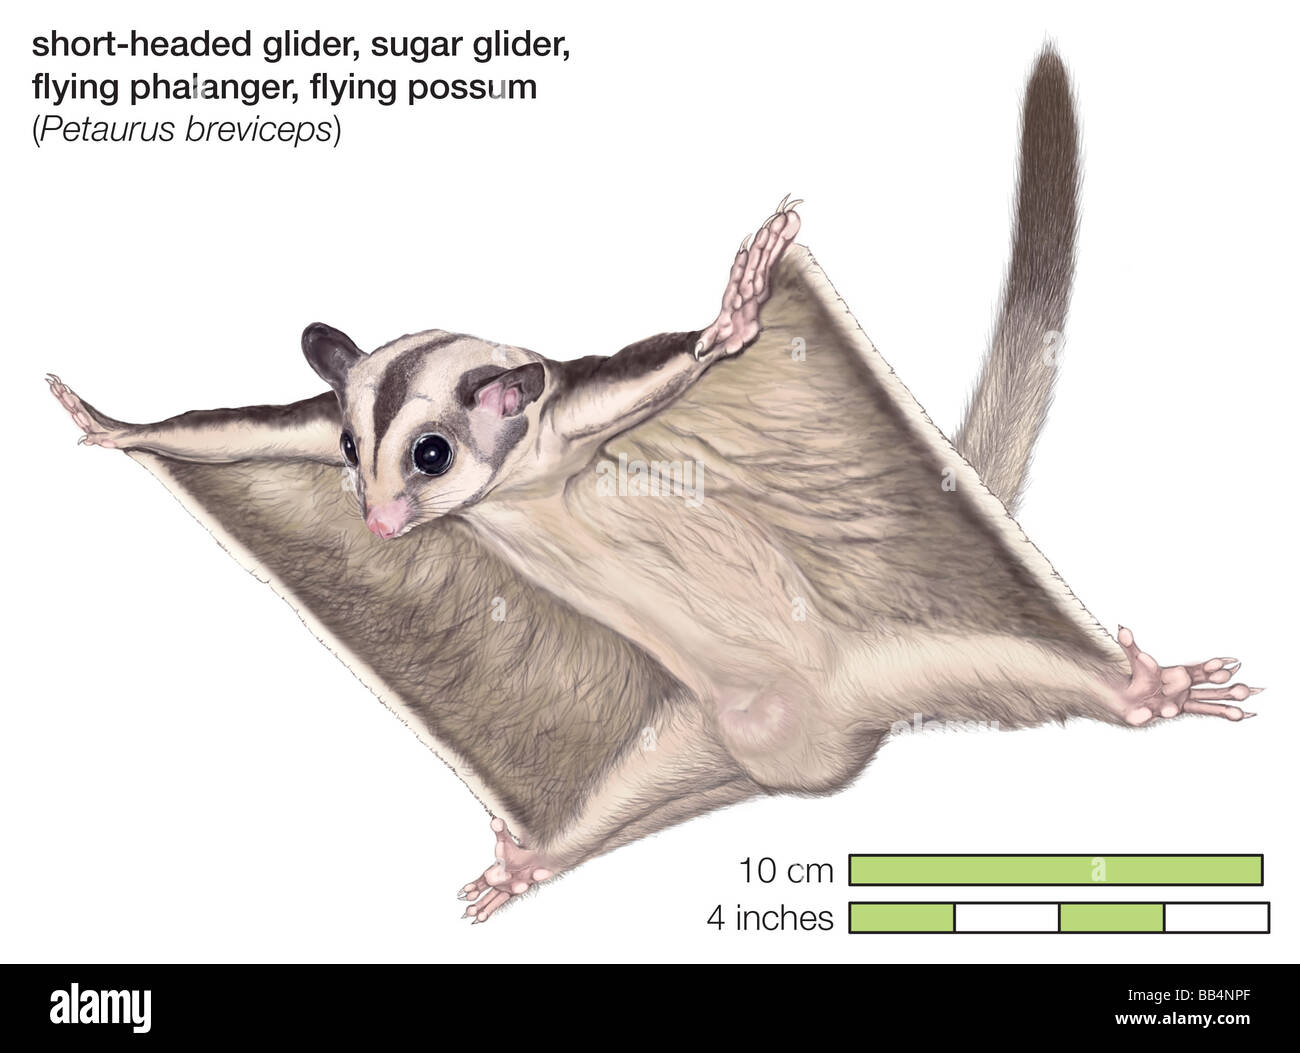 Short-headed, or sugar, glider (Petaurus breviceps) Stock Photo